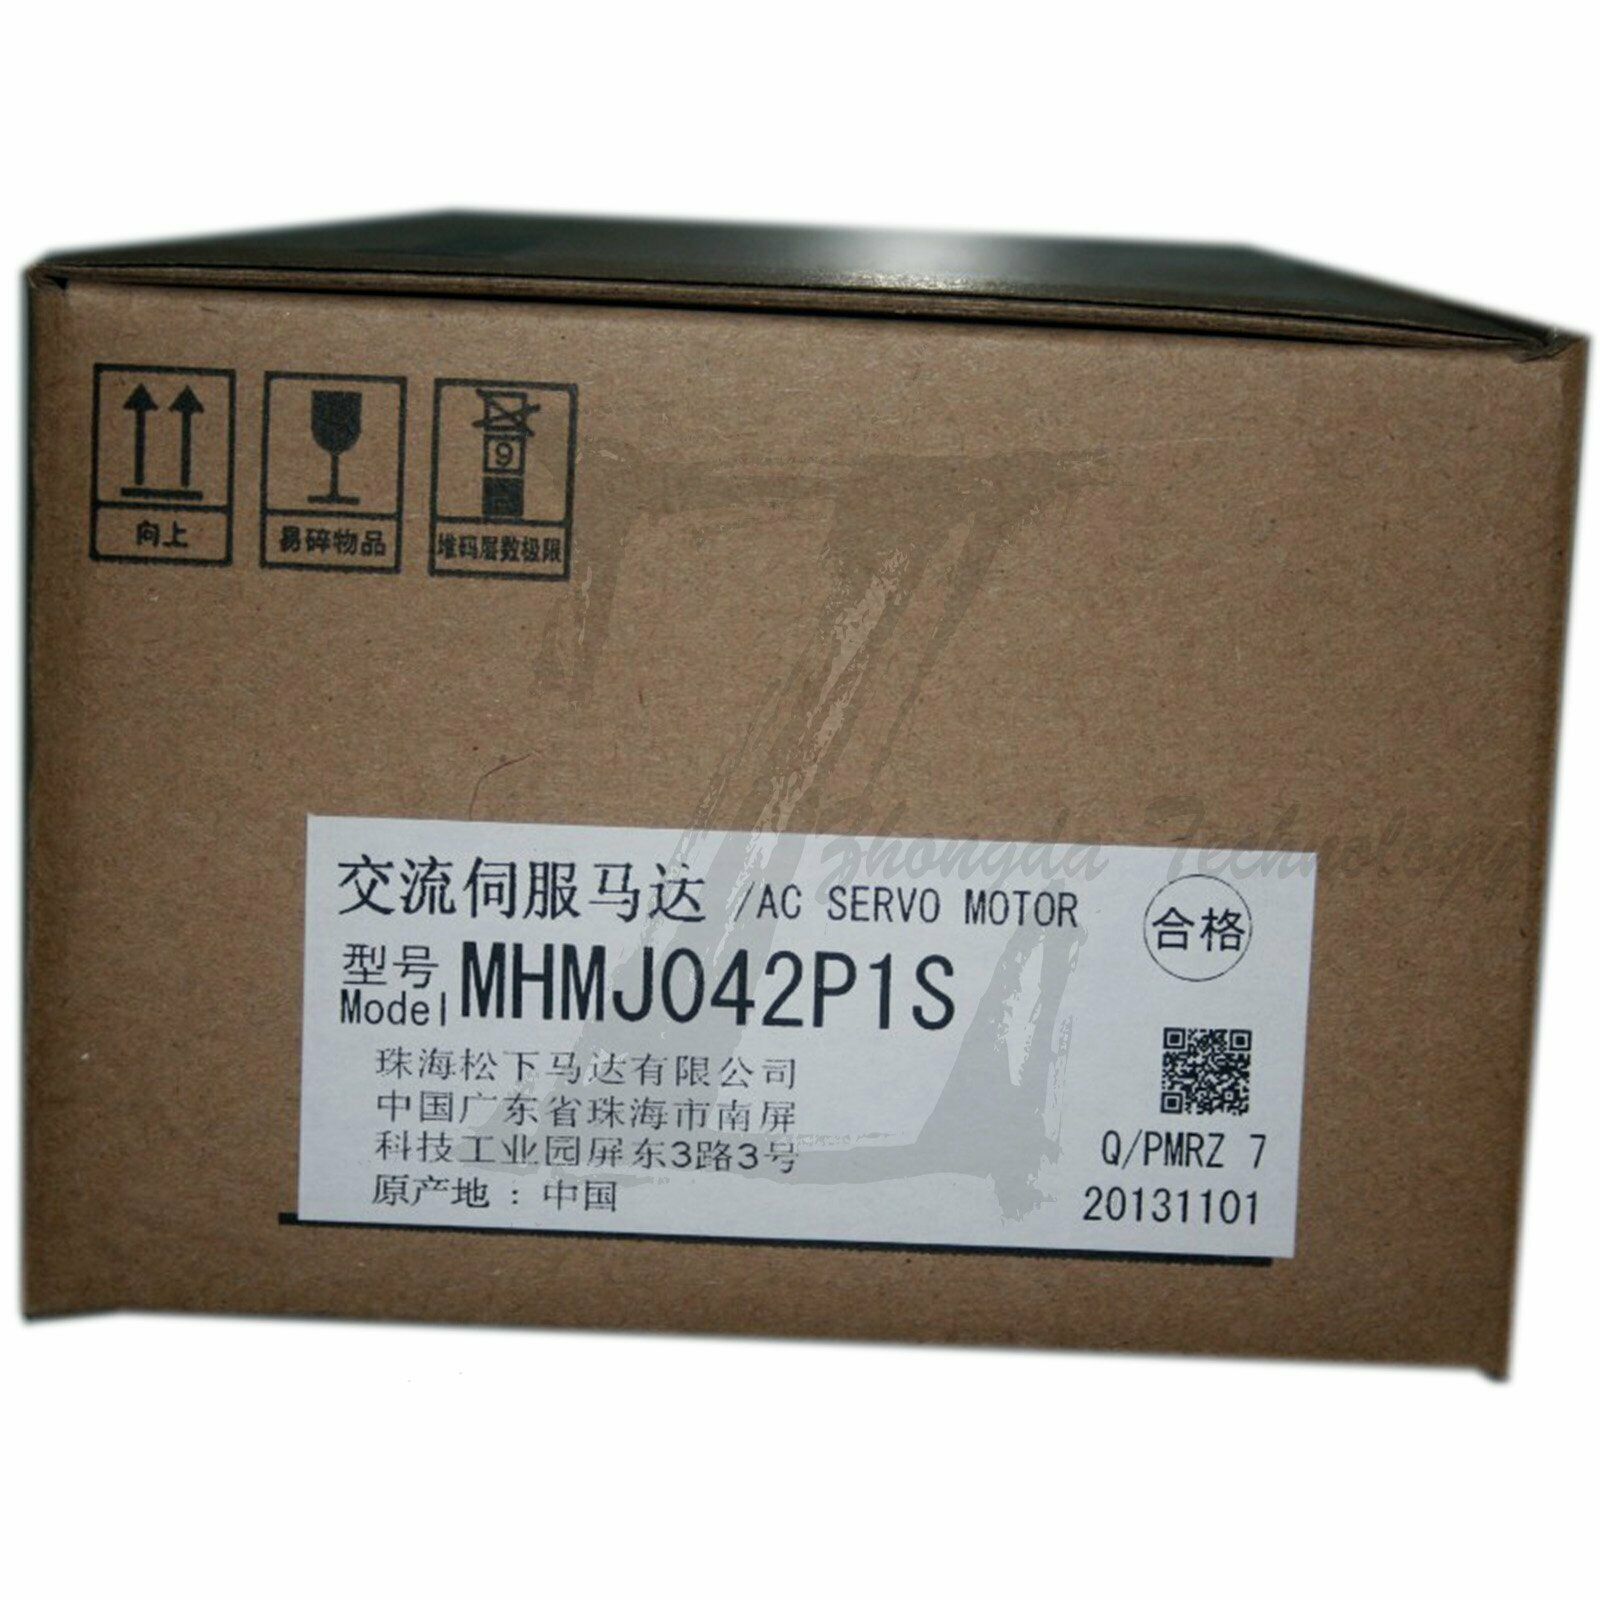 New In Box 1PC Panasonic MHMJ042P1S servo motor 400W